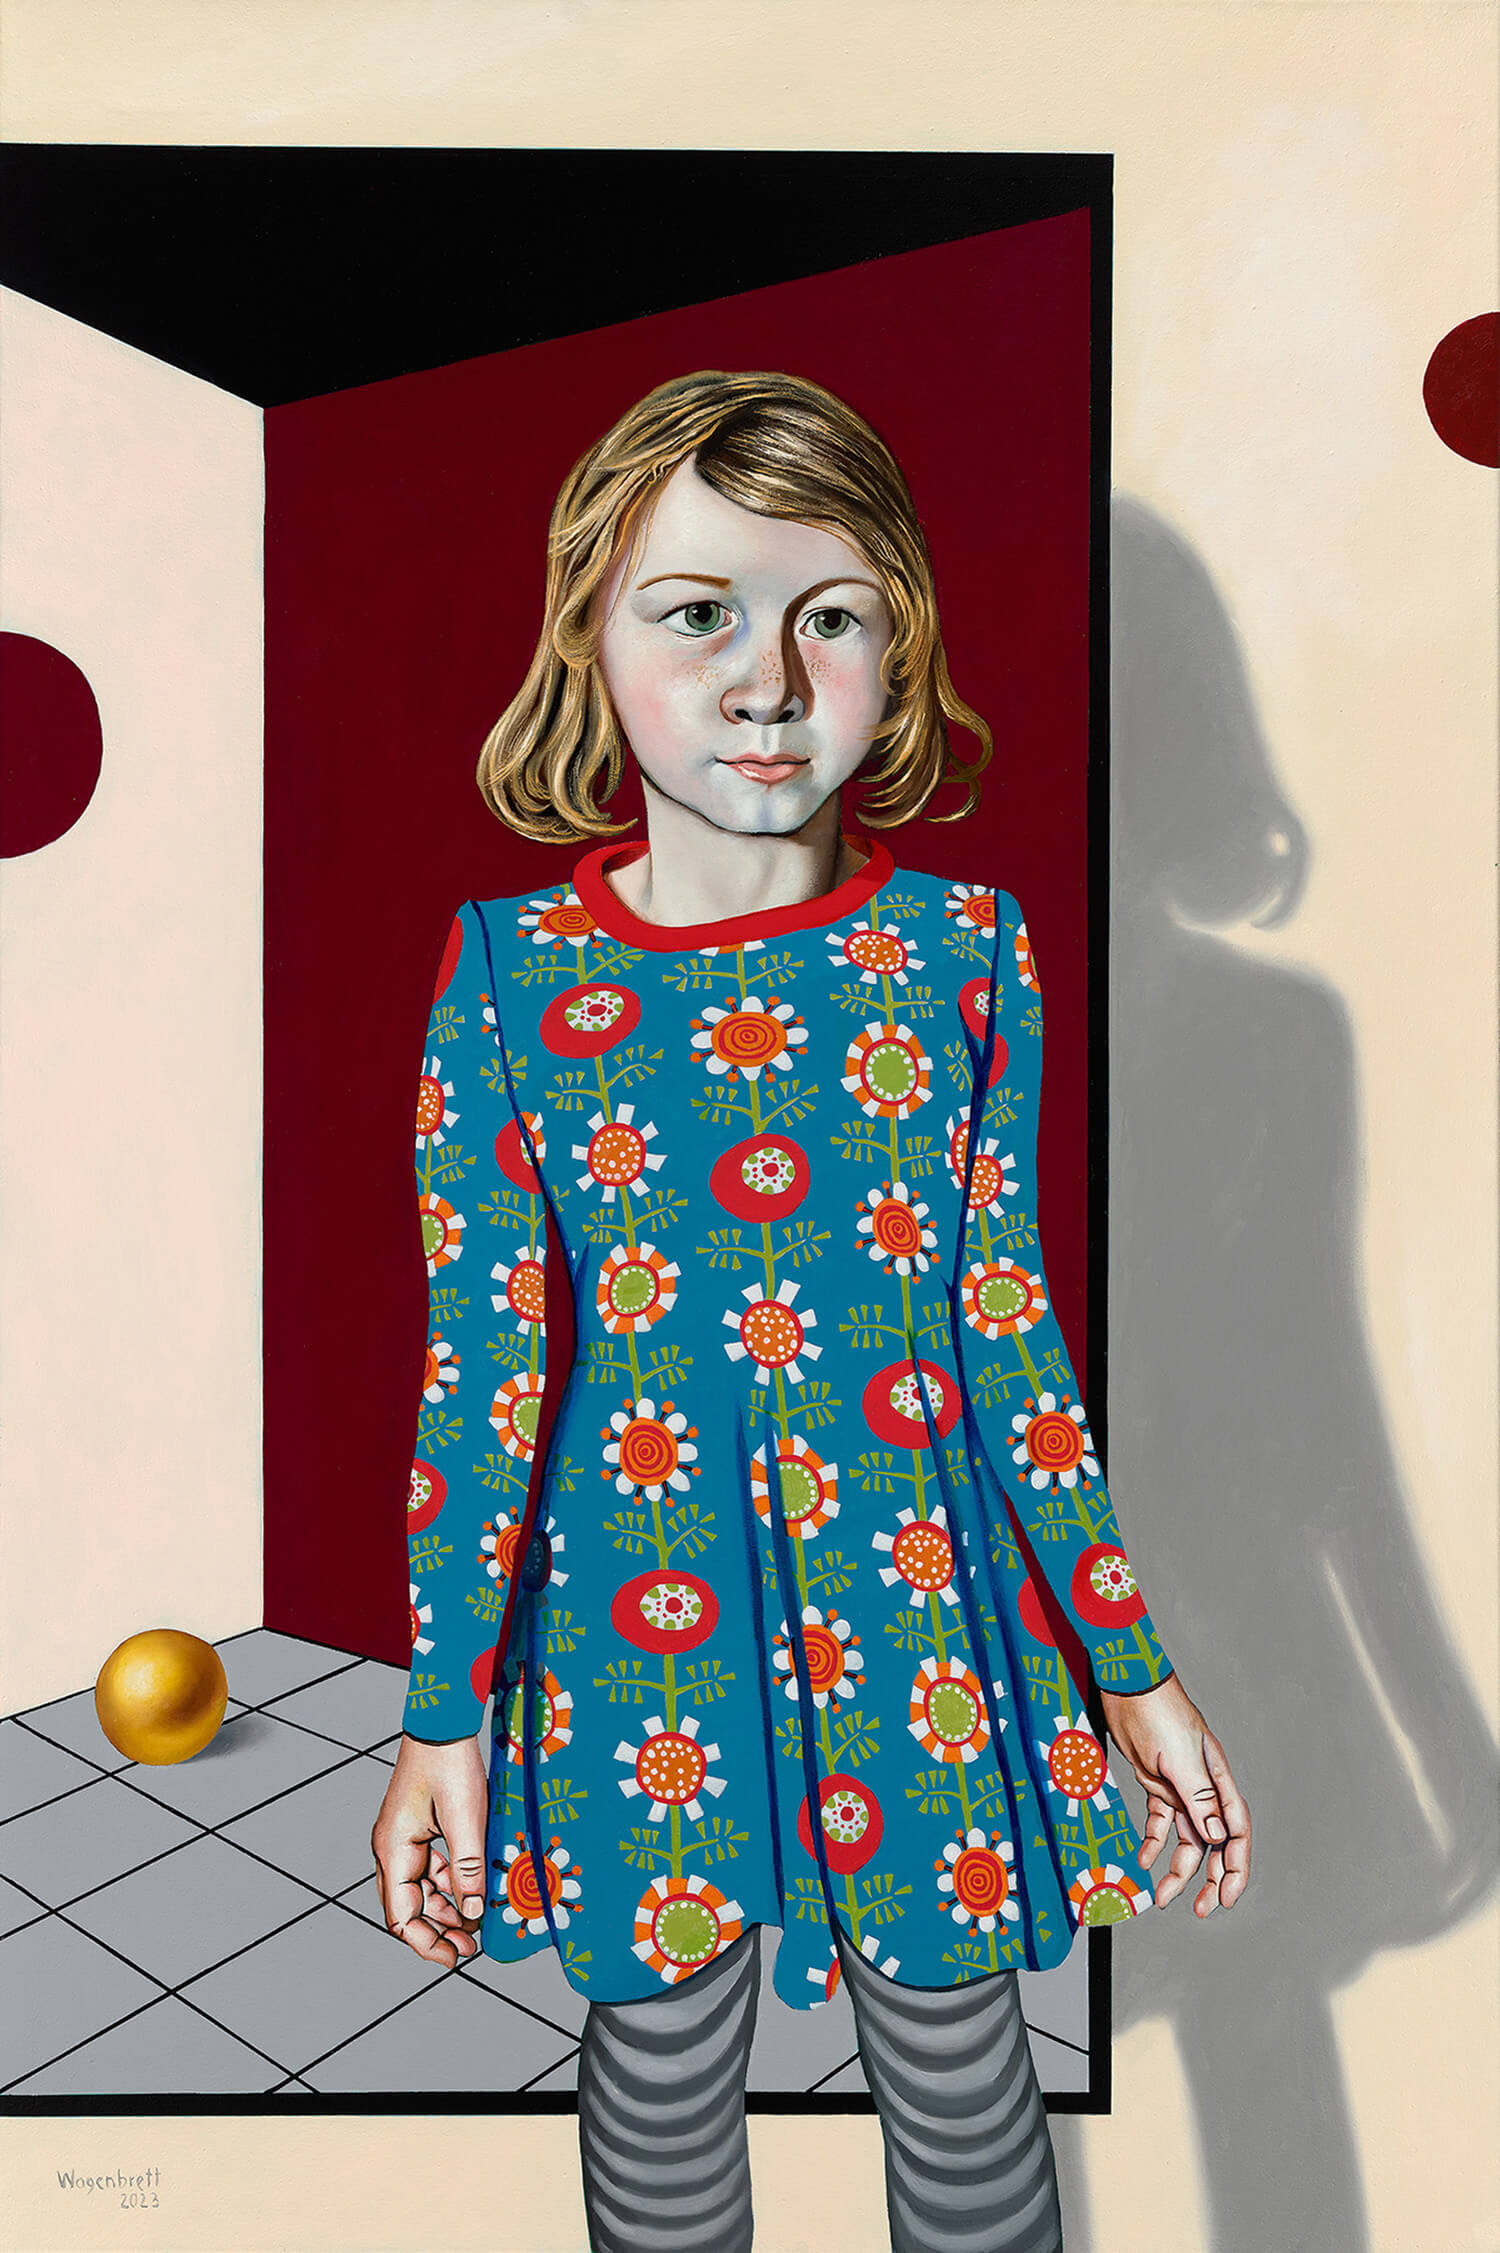 Norbert Wagenbrett, Mädchen mit goldener Kugel, 2023, Öl/Acryl auf Leinwand, 150 x 100 cm